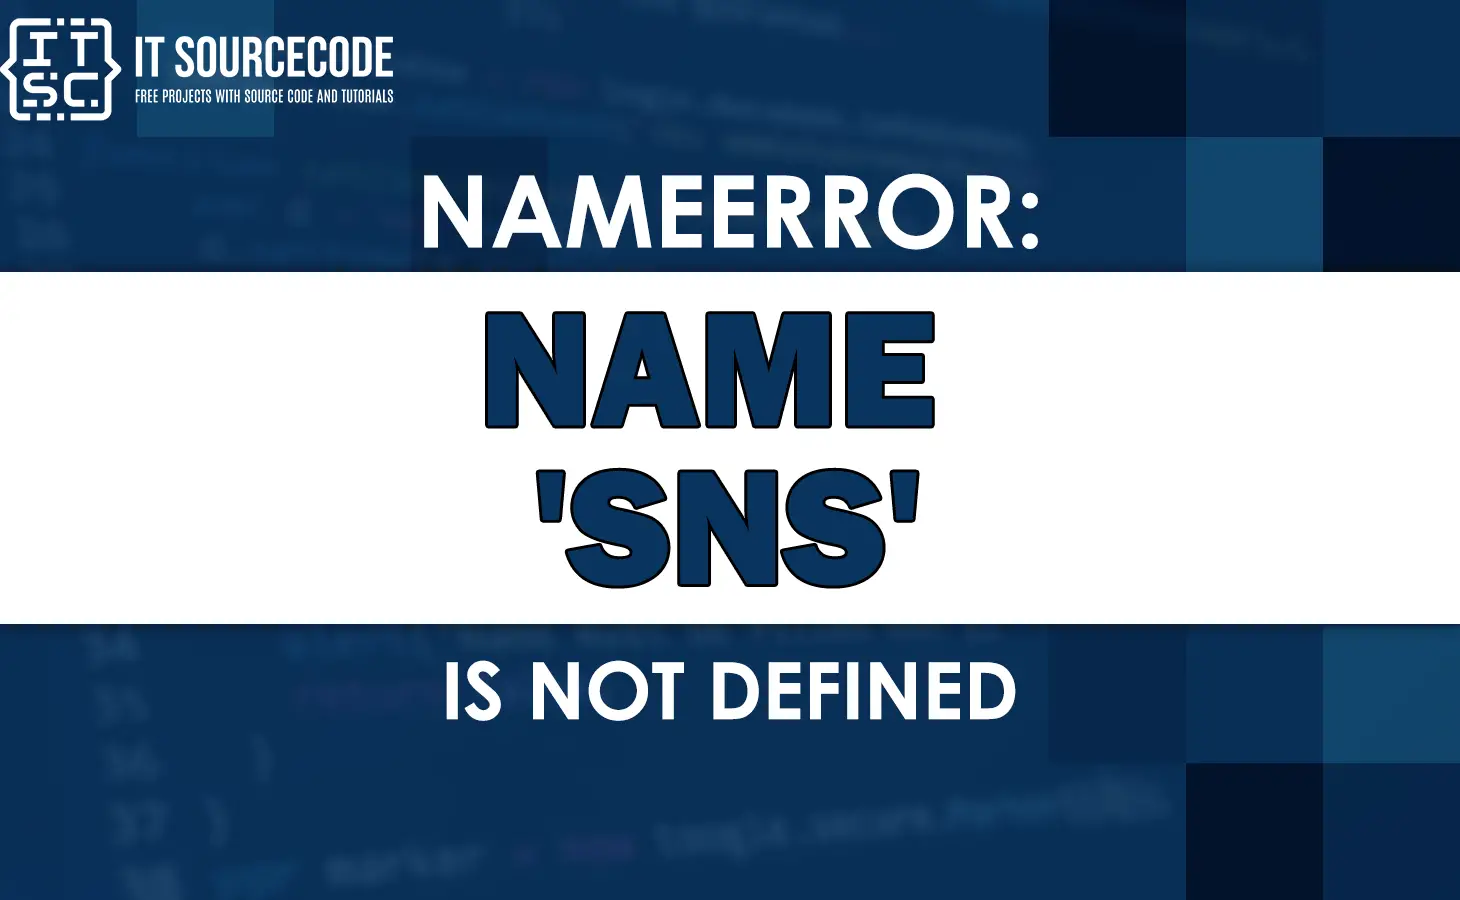 Nameerror: name sns is not defined